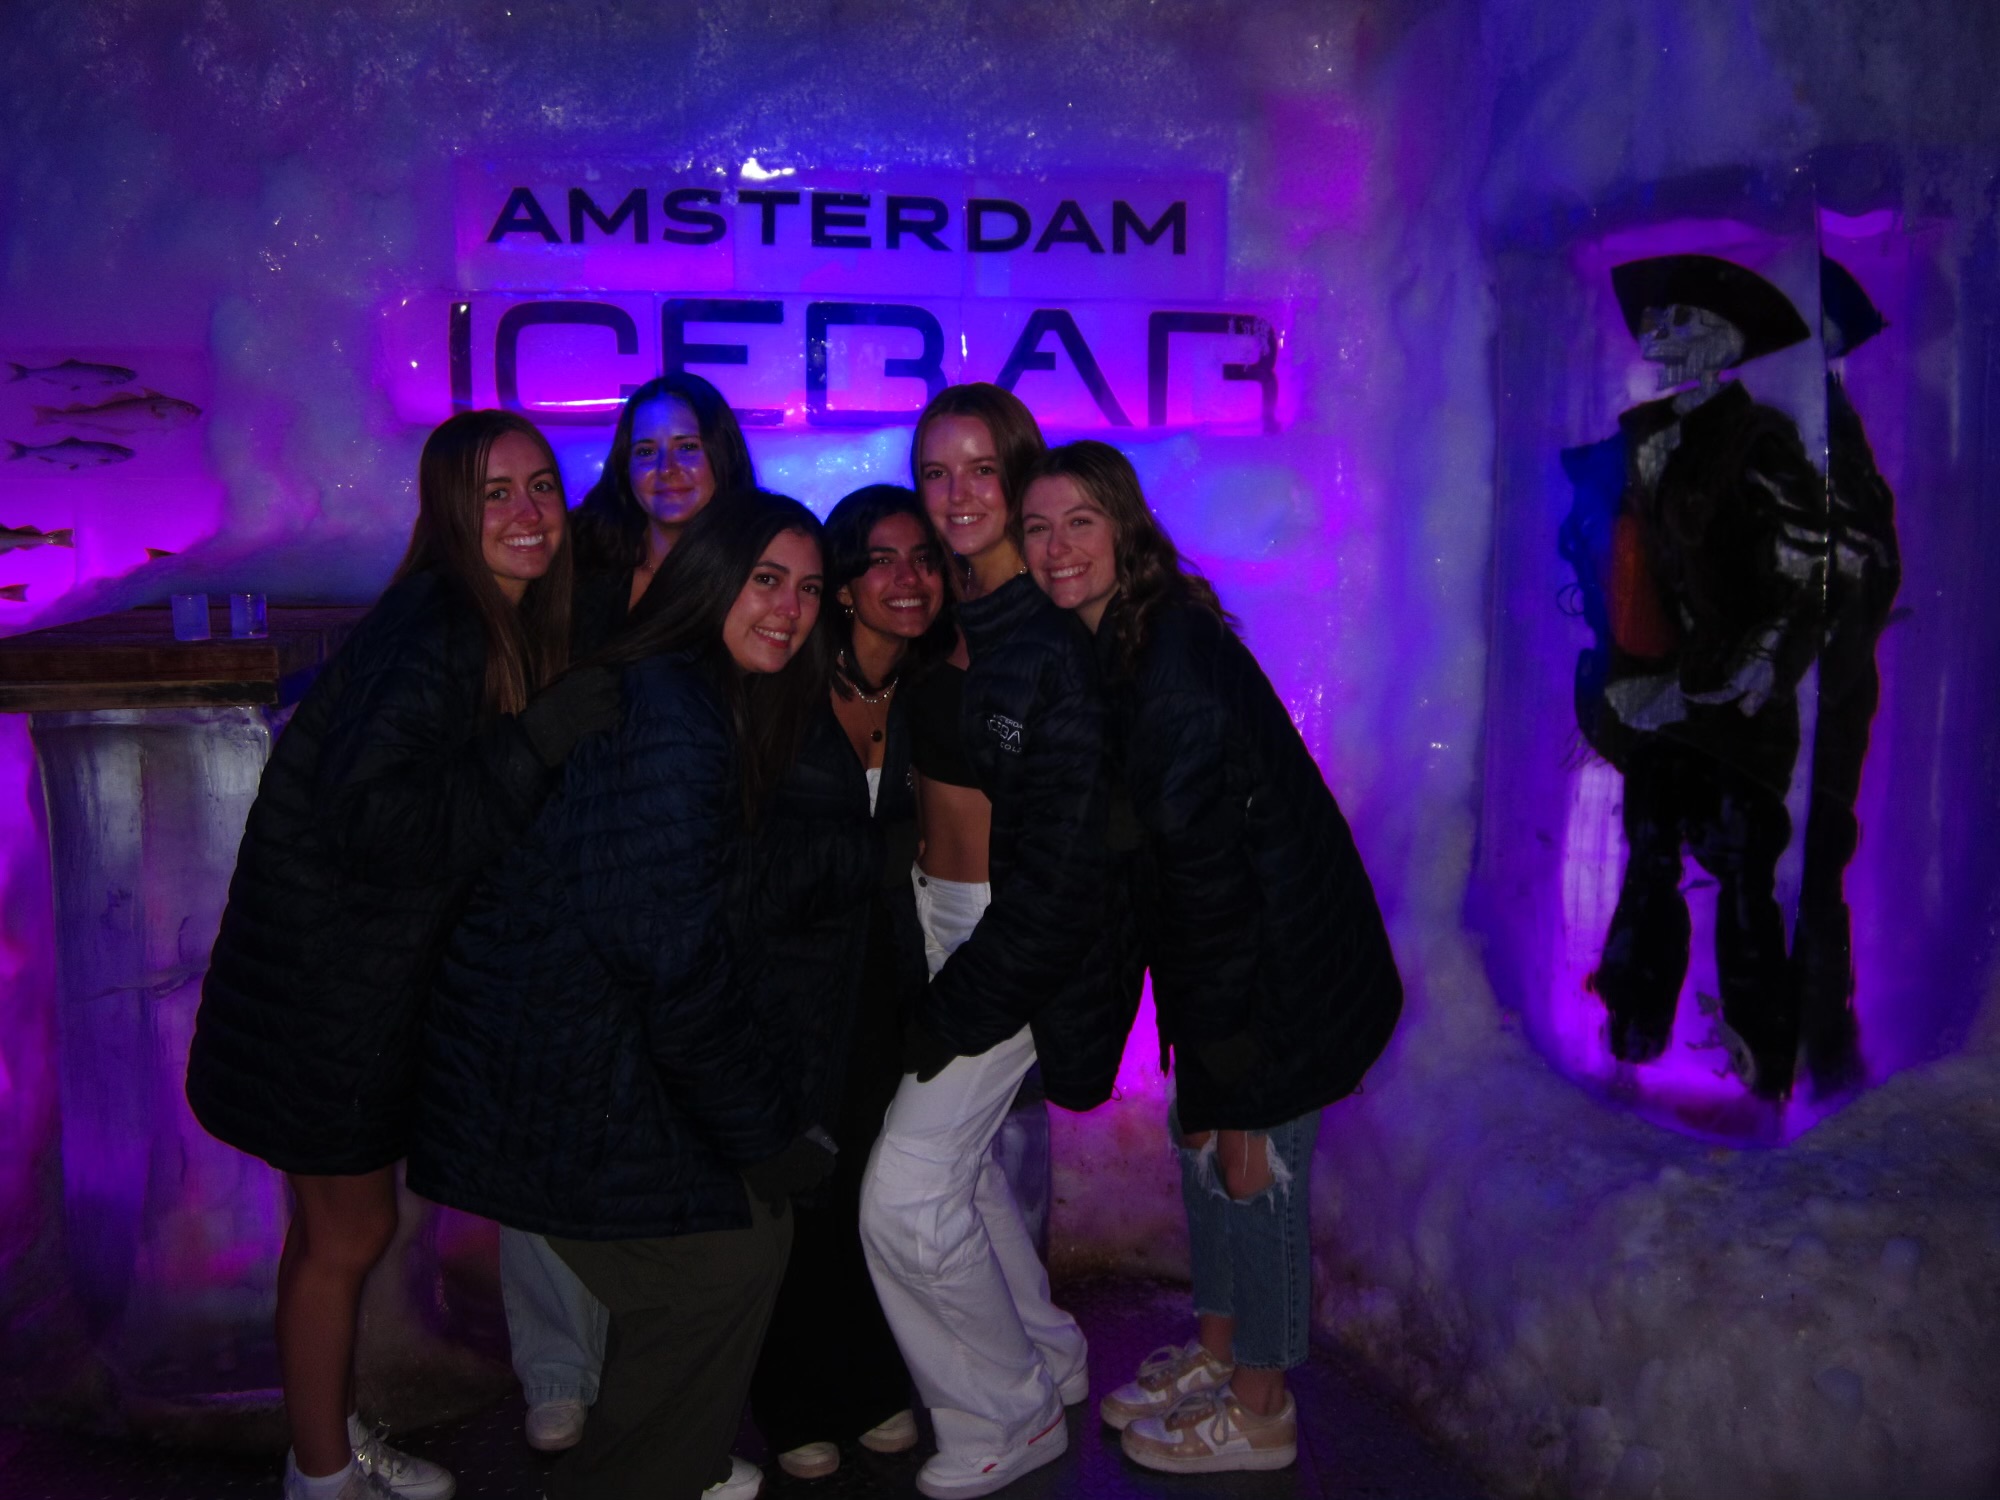 The famous Amsterdam IceBar!